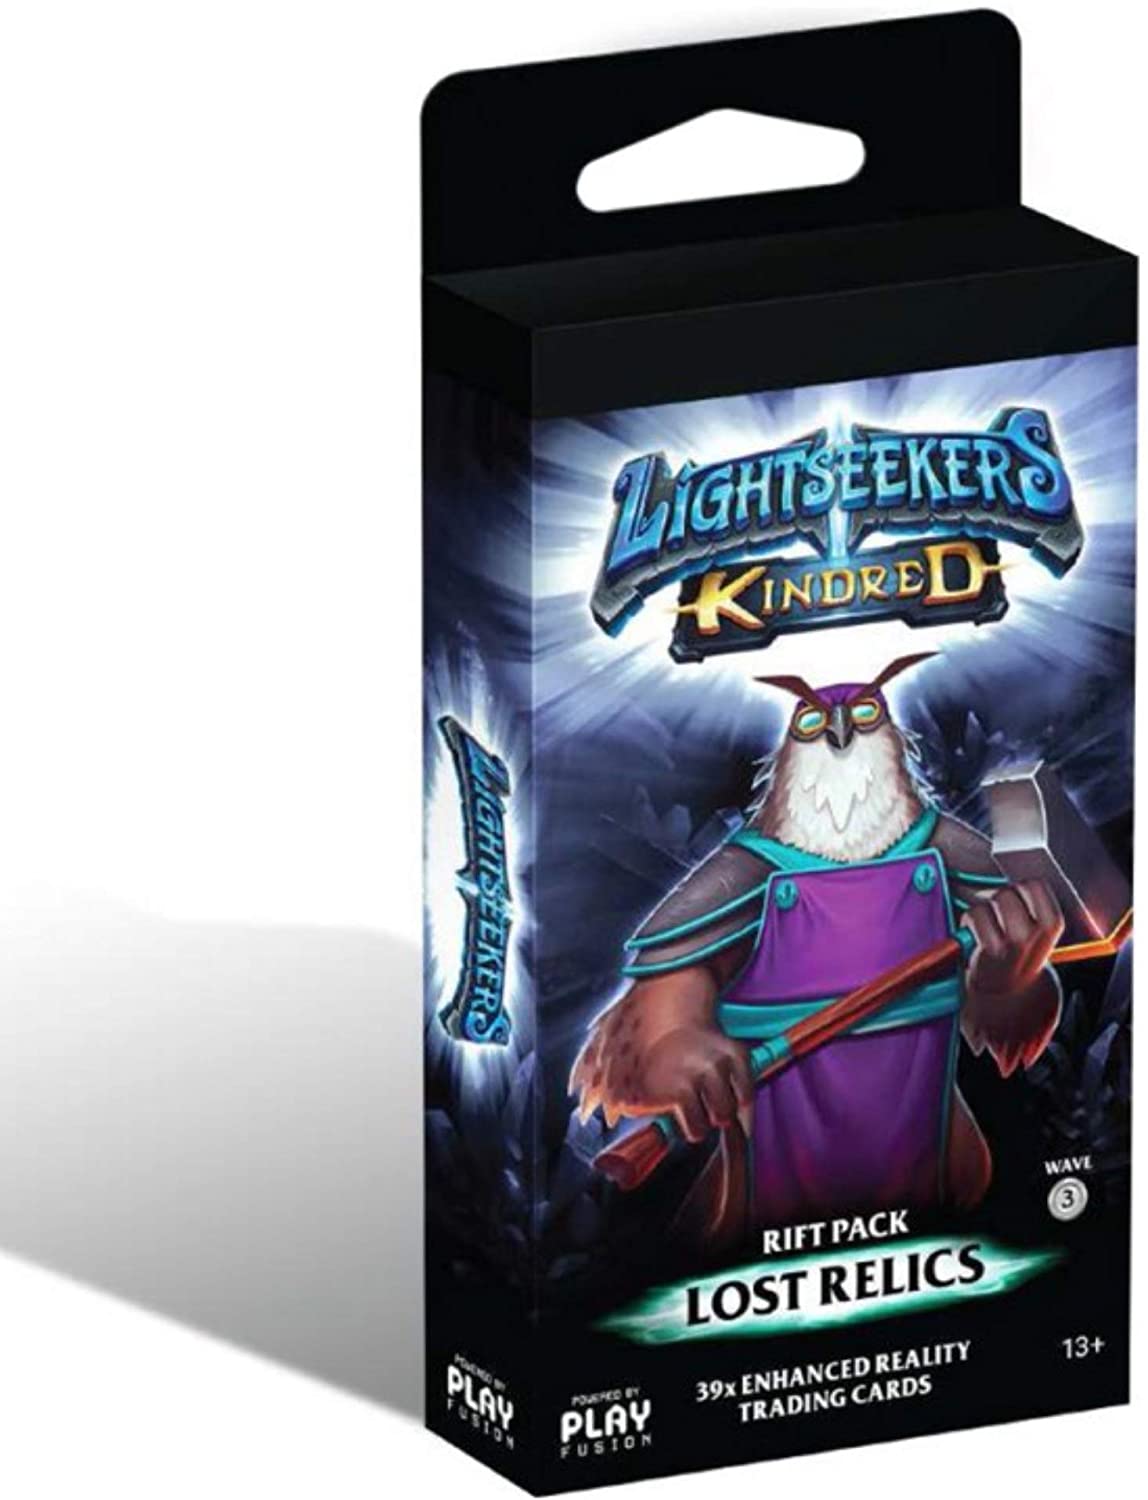 Lightseekers: Kindred Rift Pack - Lost Relics